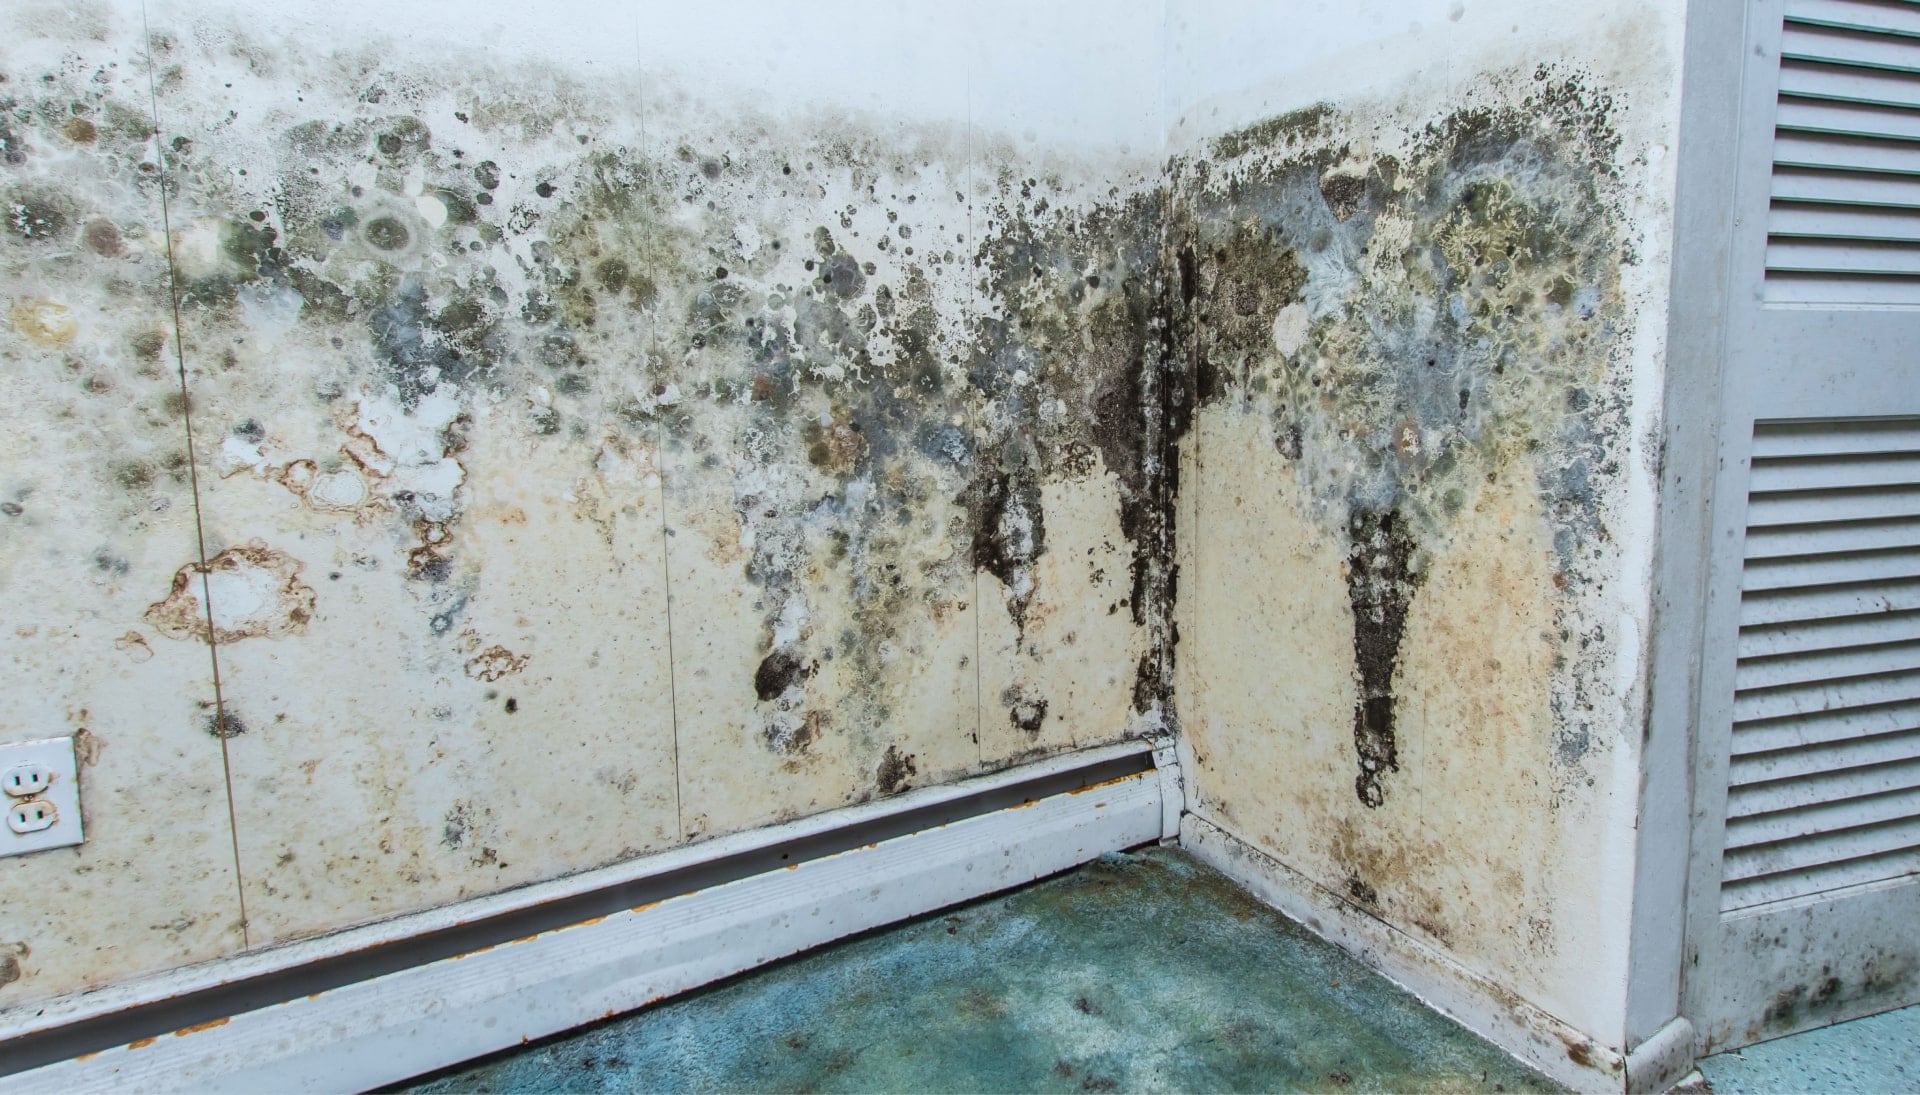 Professional mold removal, odor control, and water damage restoration service in Aurora, Colorado.